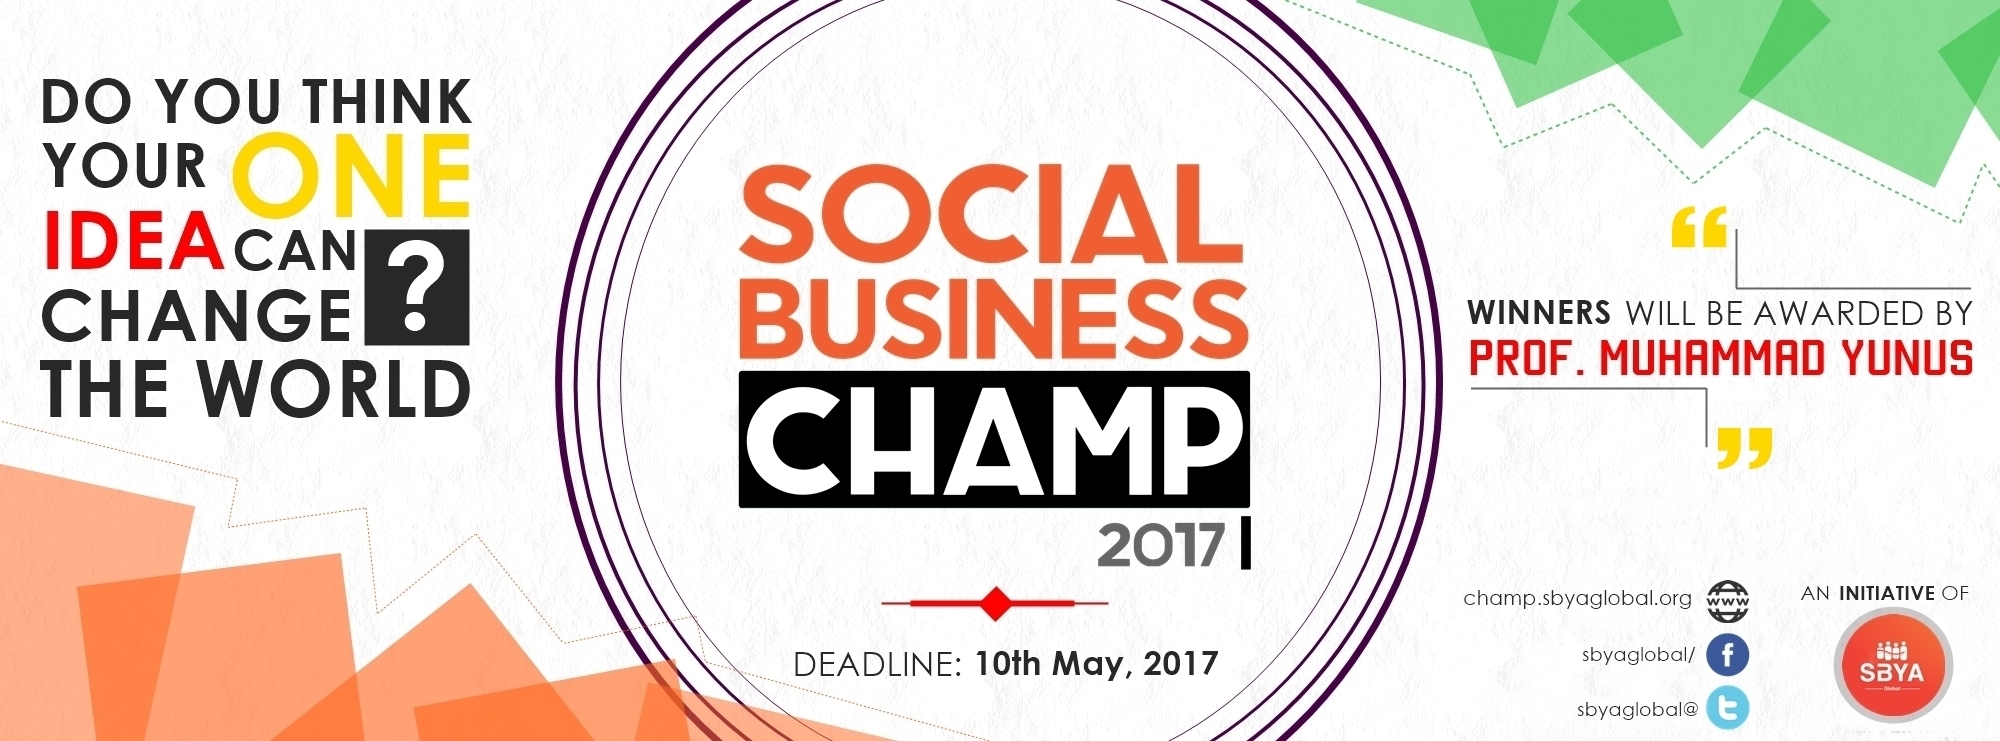 Social Business Champ 2017